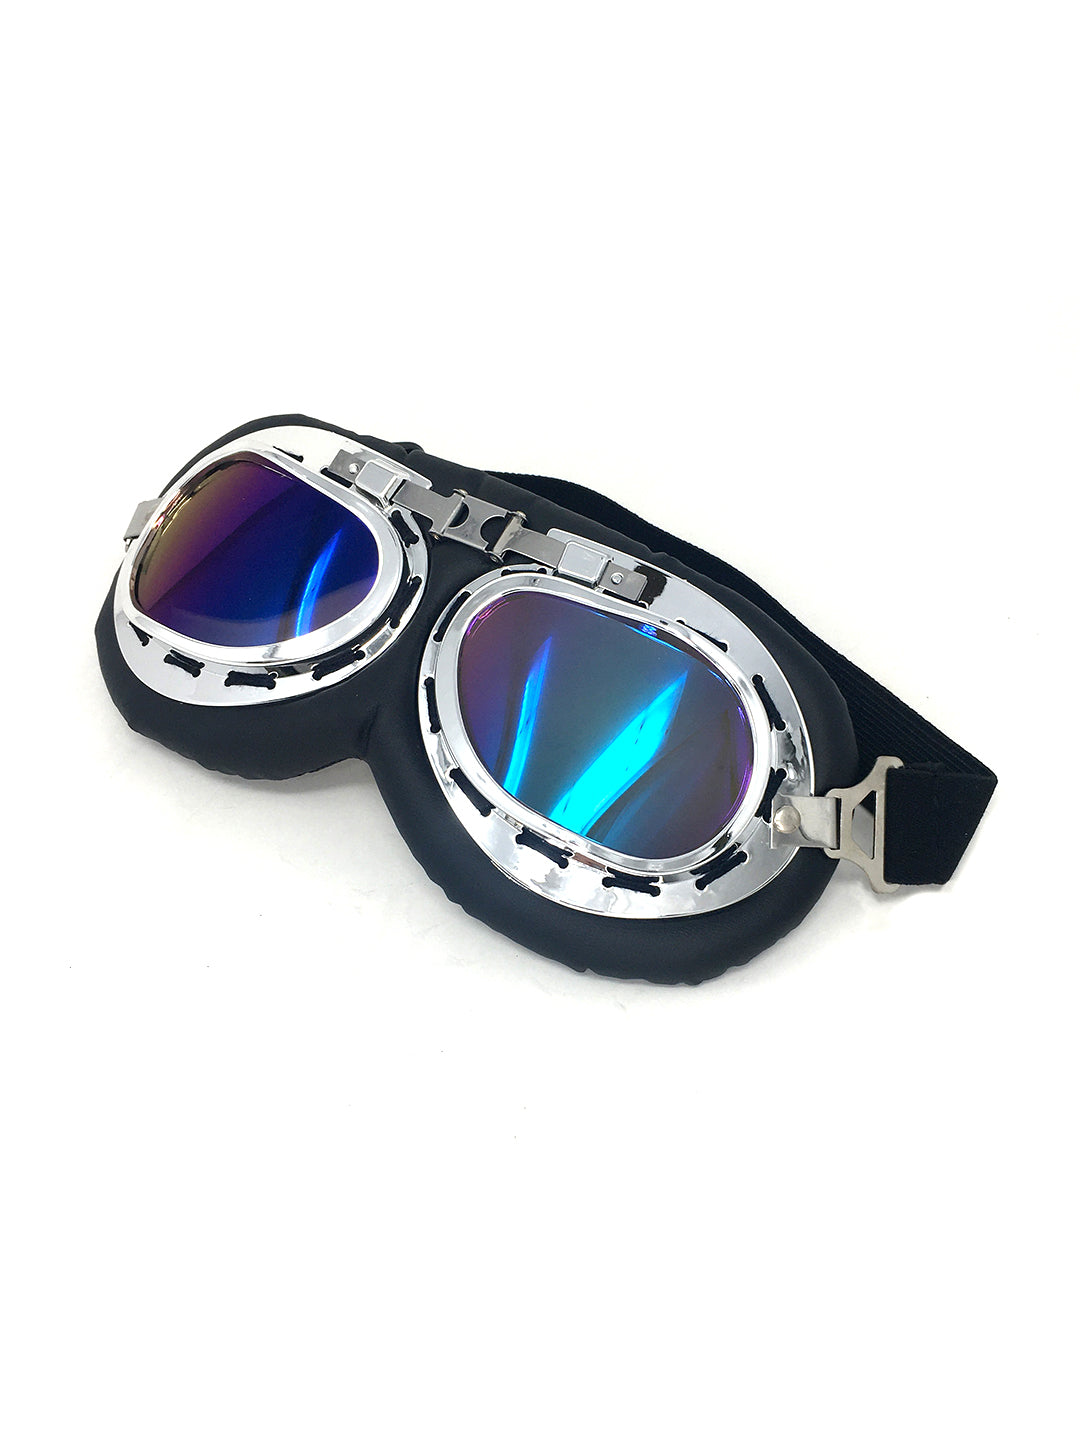 Silver and Black Aviator Goggles